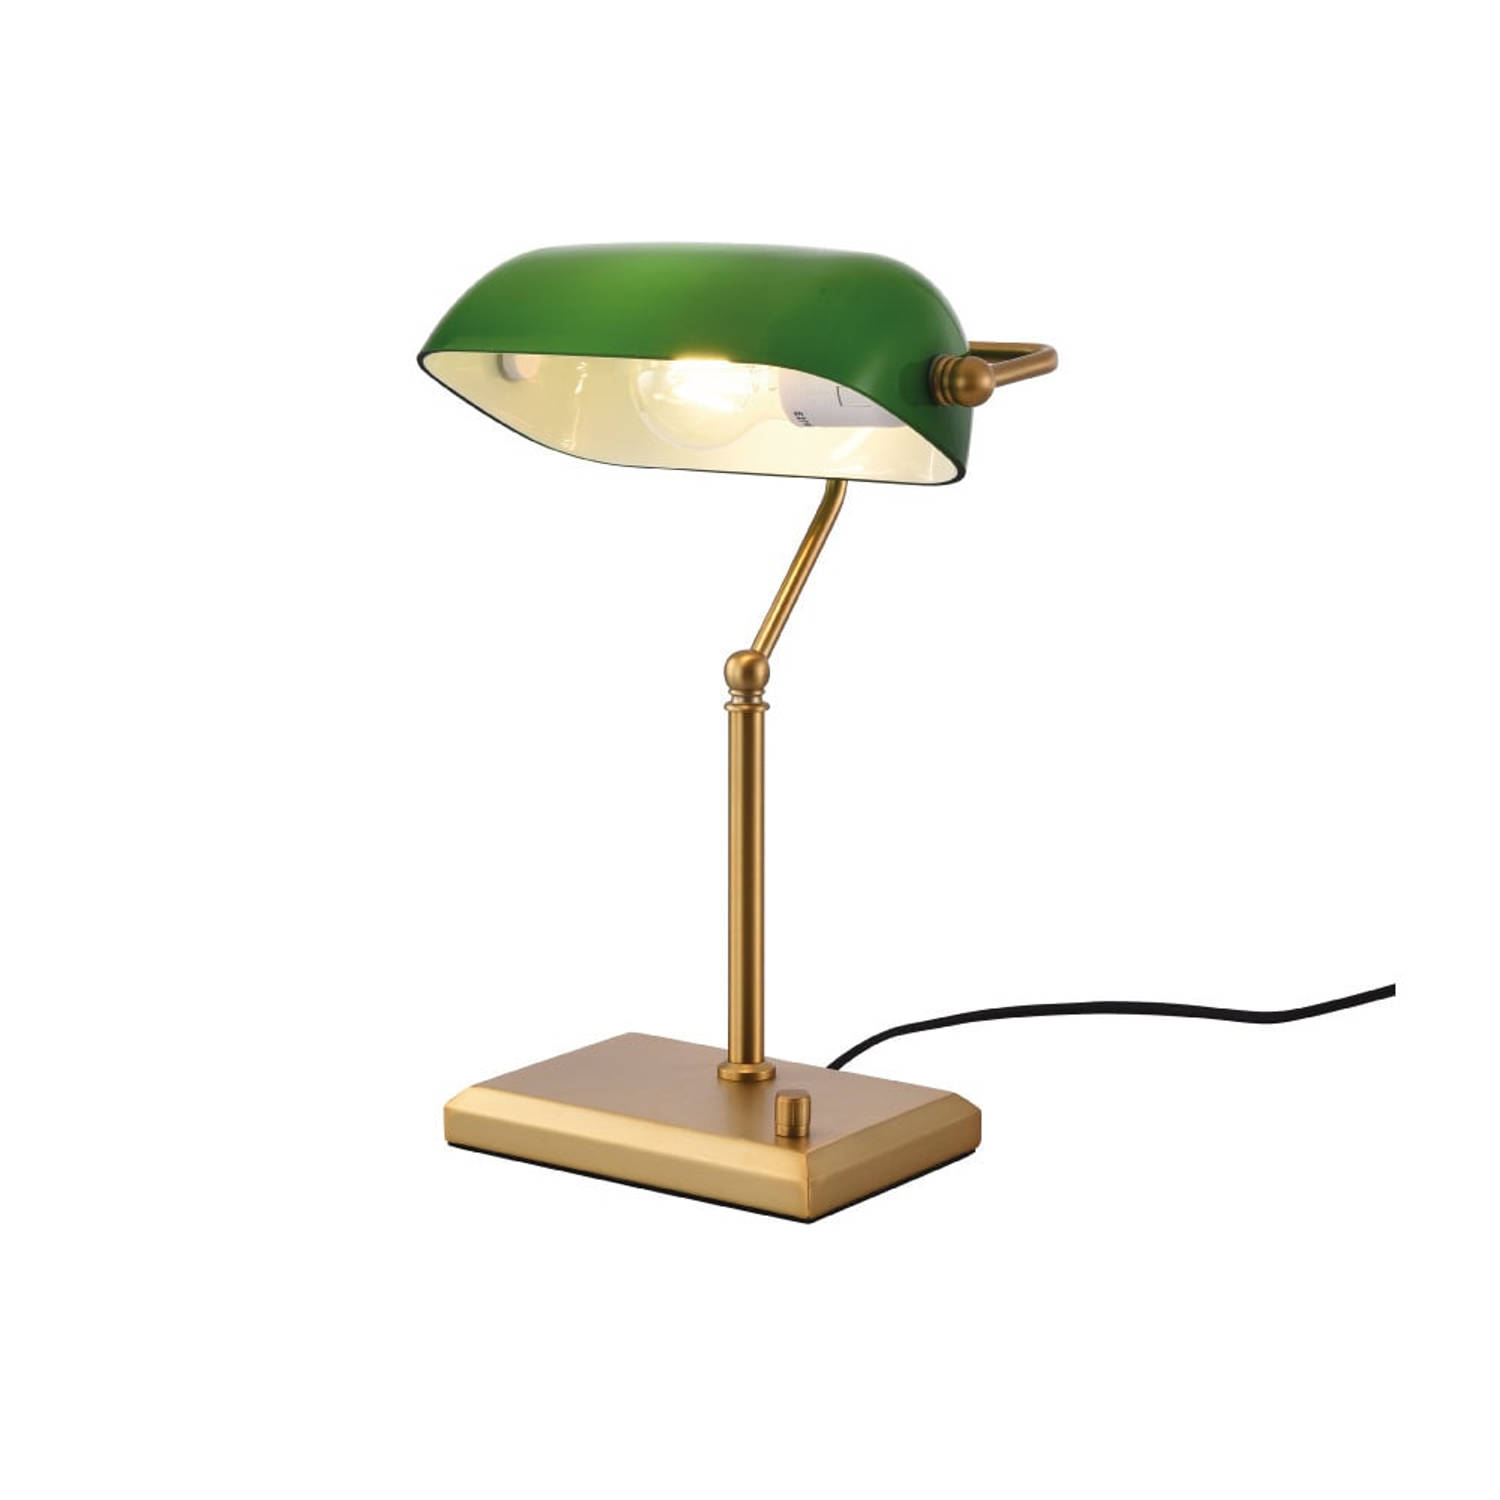 Artdelight Tafellamp Stanford H 37 cm goud groen aanbieding